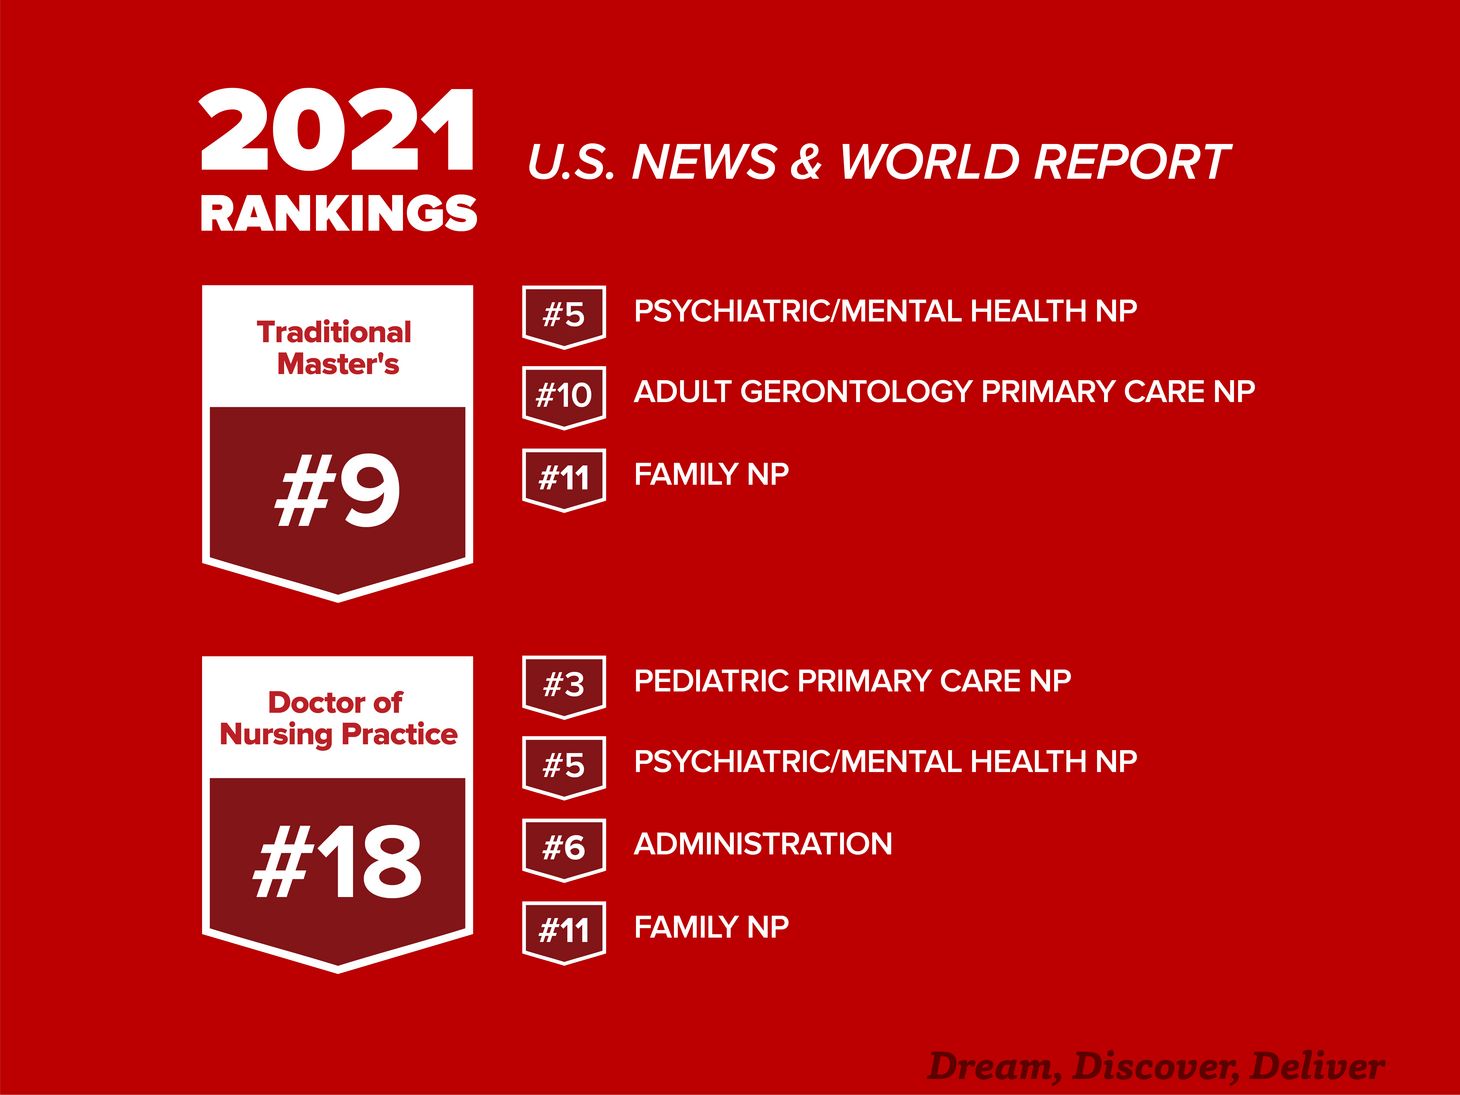 U.S. News & World Report 2021 ranking for Graduate programs 